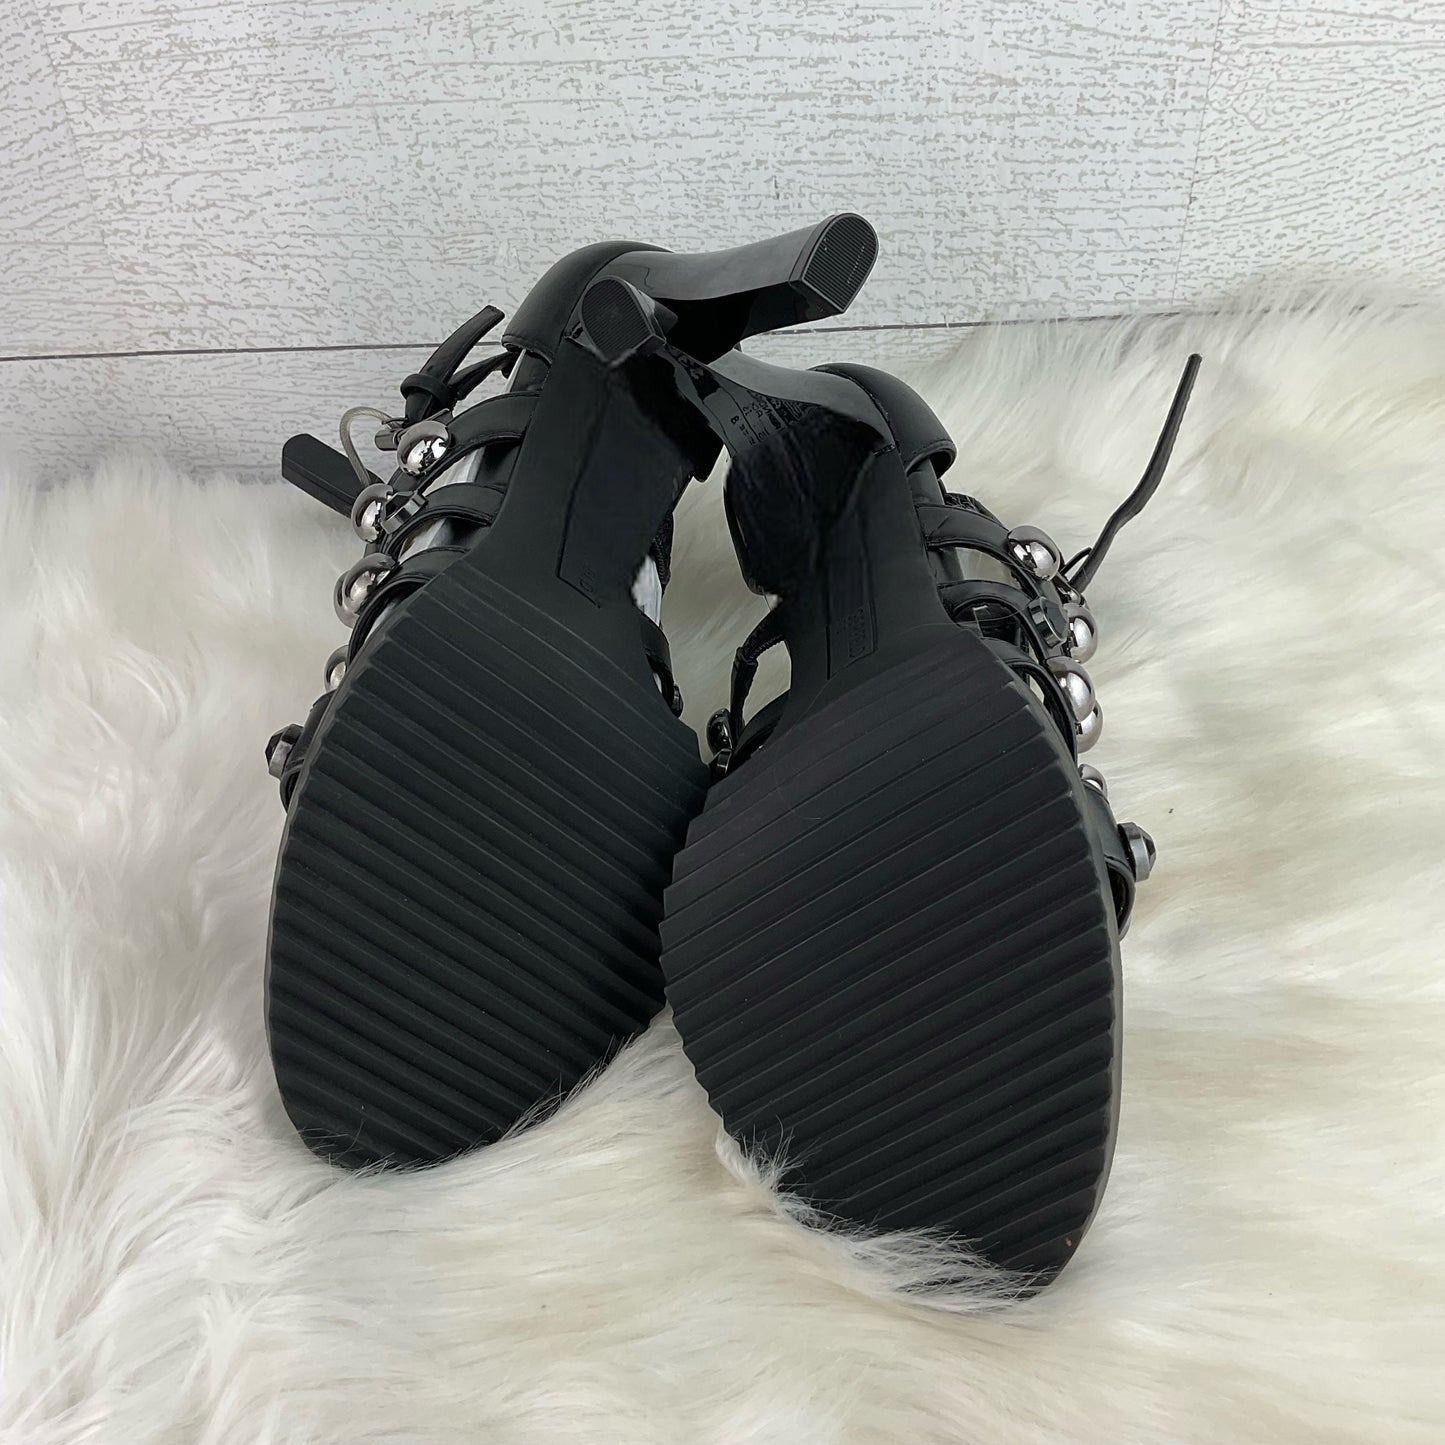 Black Sandals Designer Karl Lagerfeld, Size 8